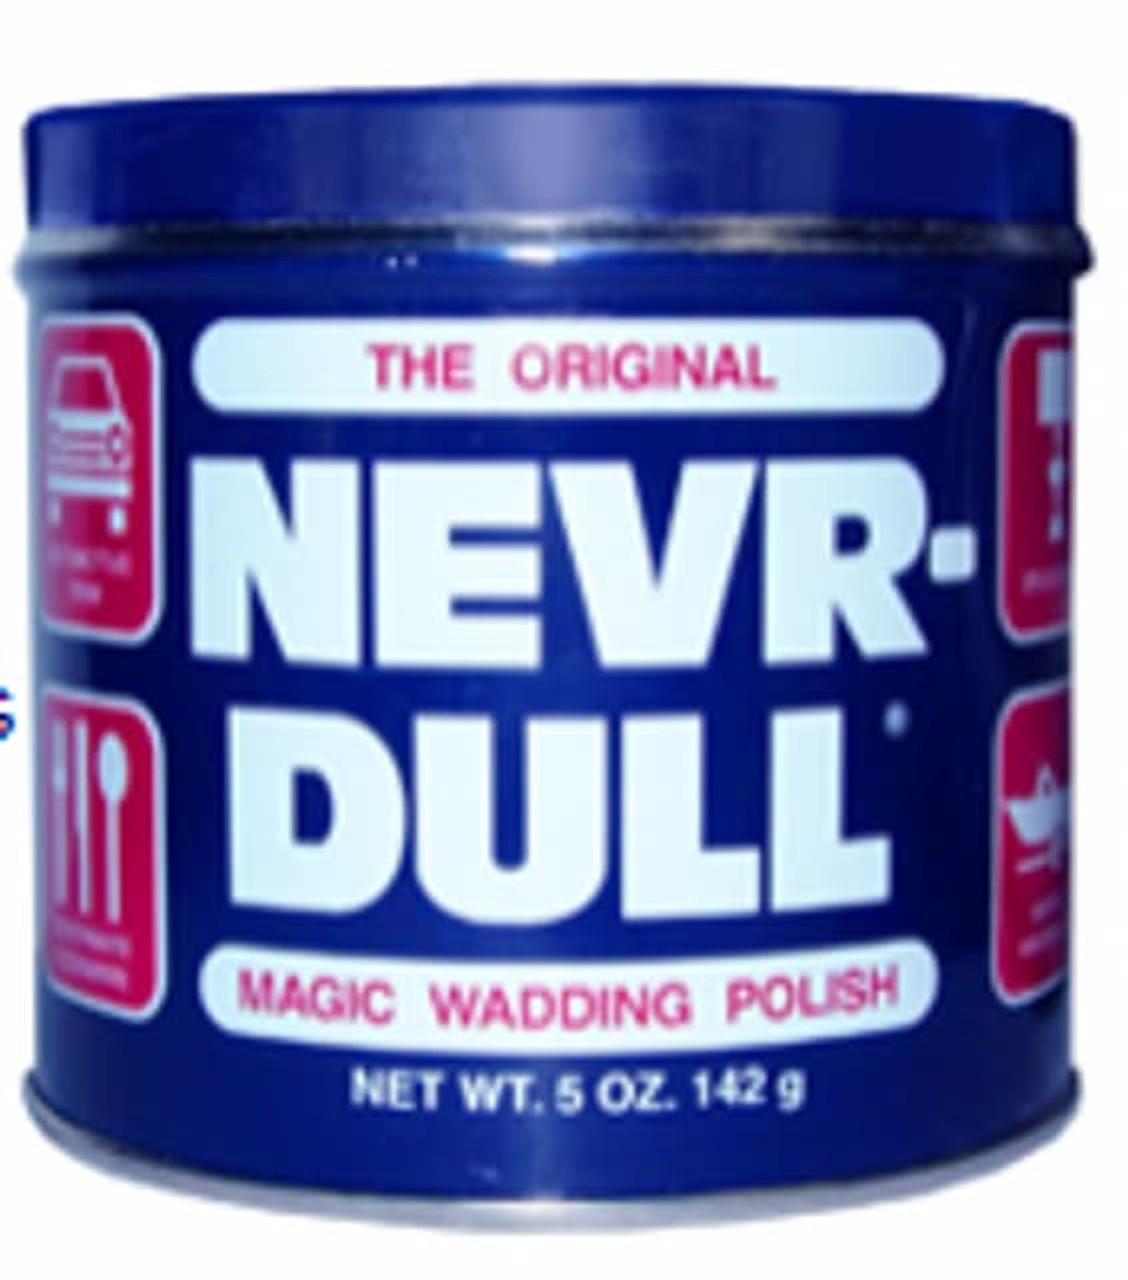 Nevr-Dull Magic Wadding Polish